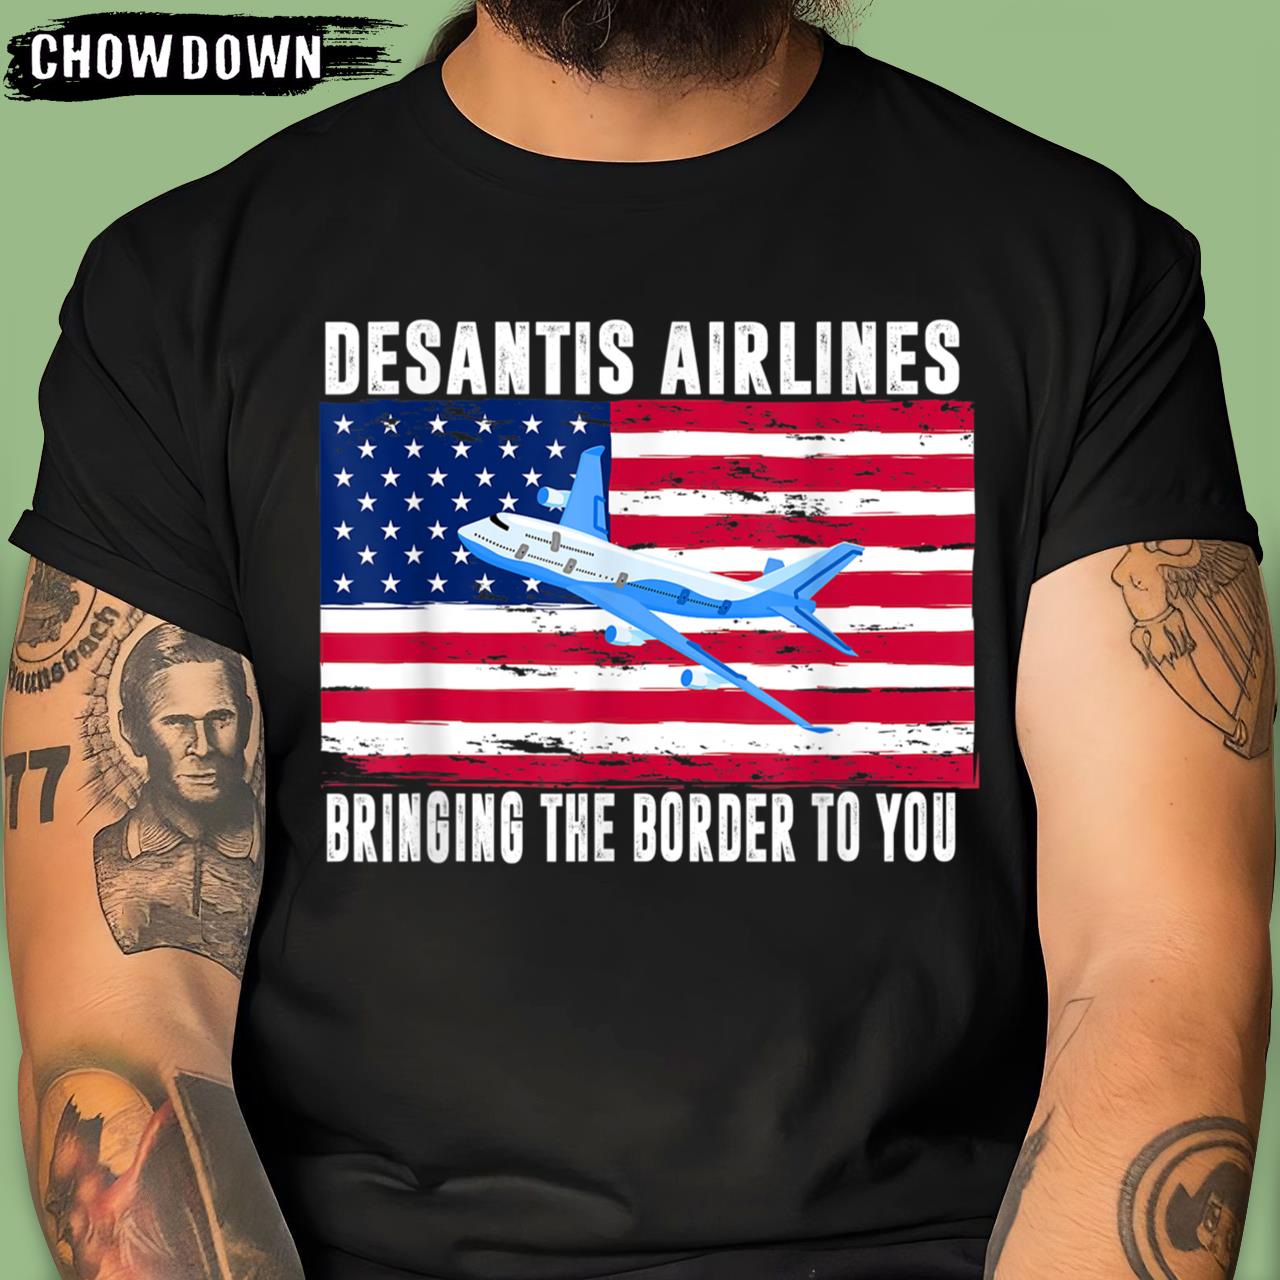 DeSantis Airlines Bringing The Border To You DeSantis Airlines T-Shirt